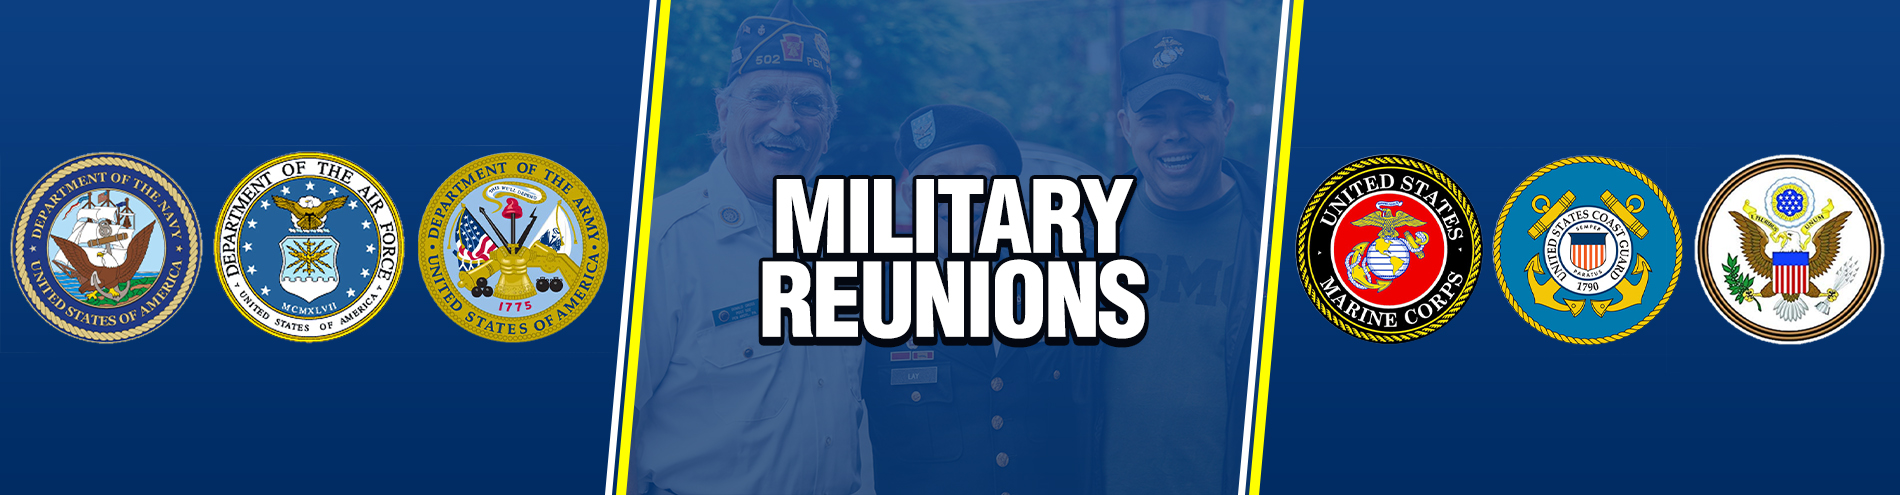 Military Reunions Header